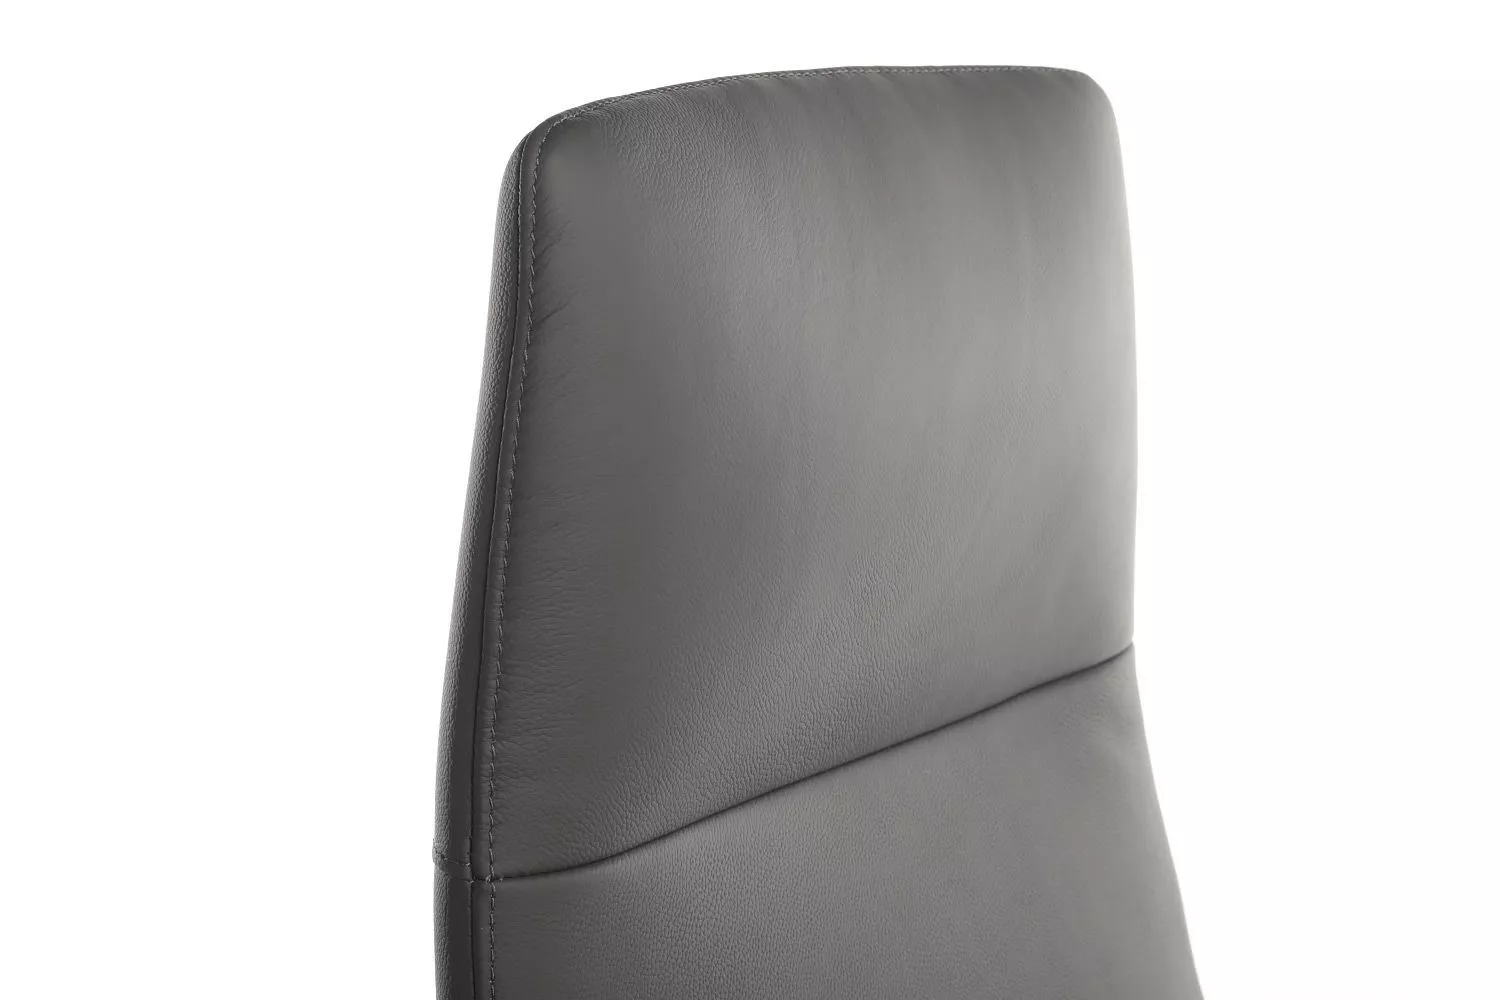 Кресло RIVA DESIGN Spell (А1719) антрацит